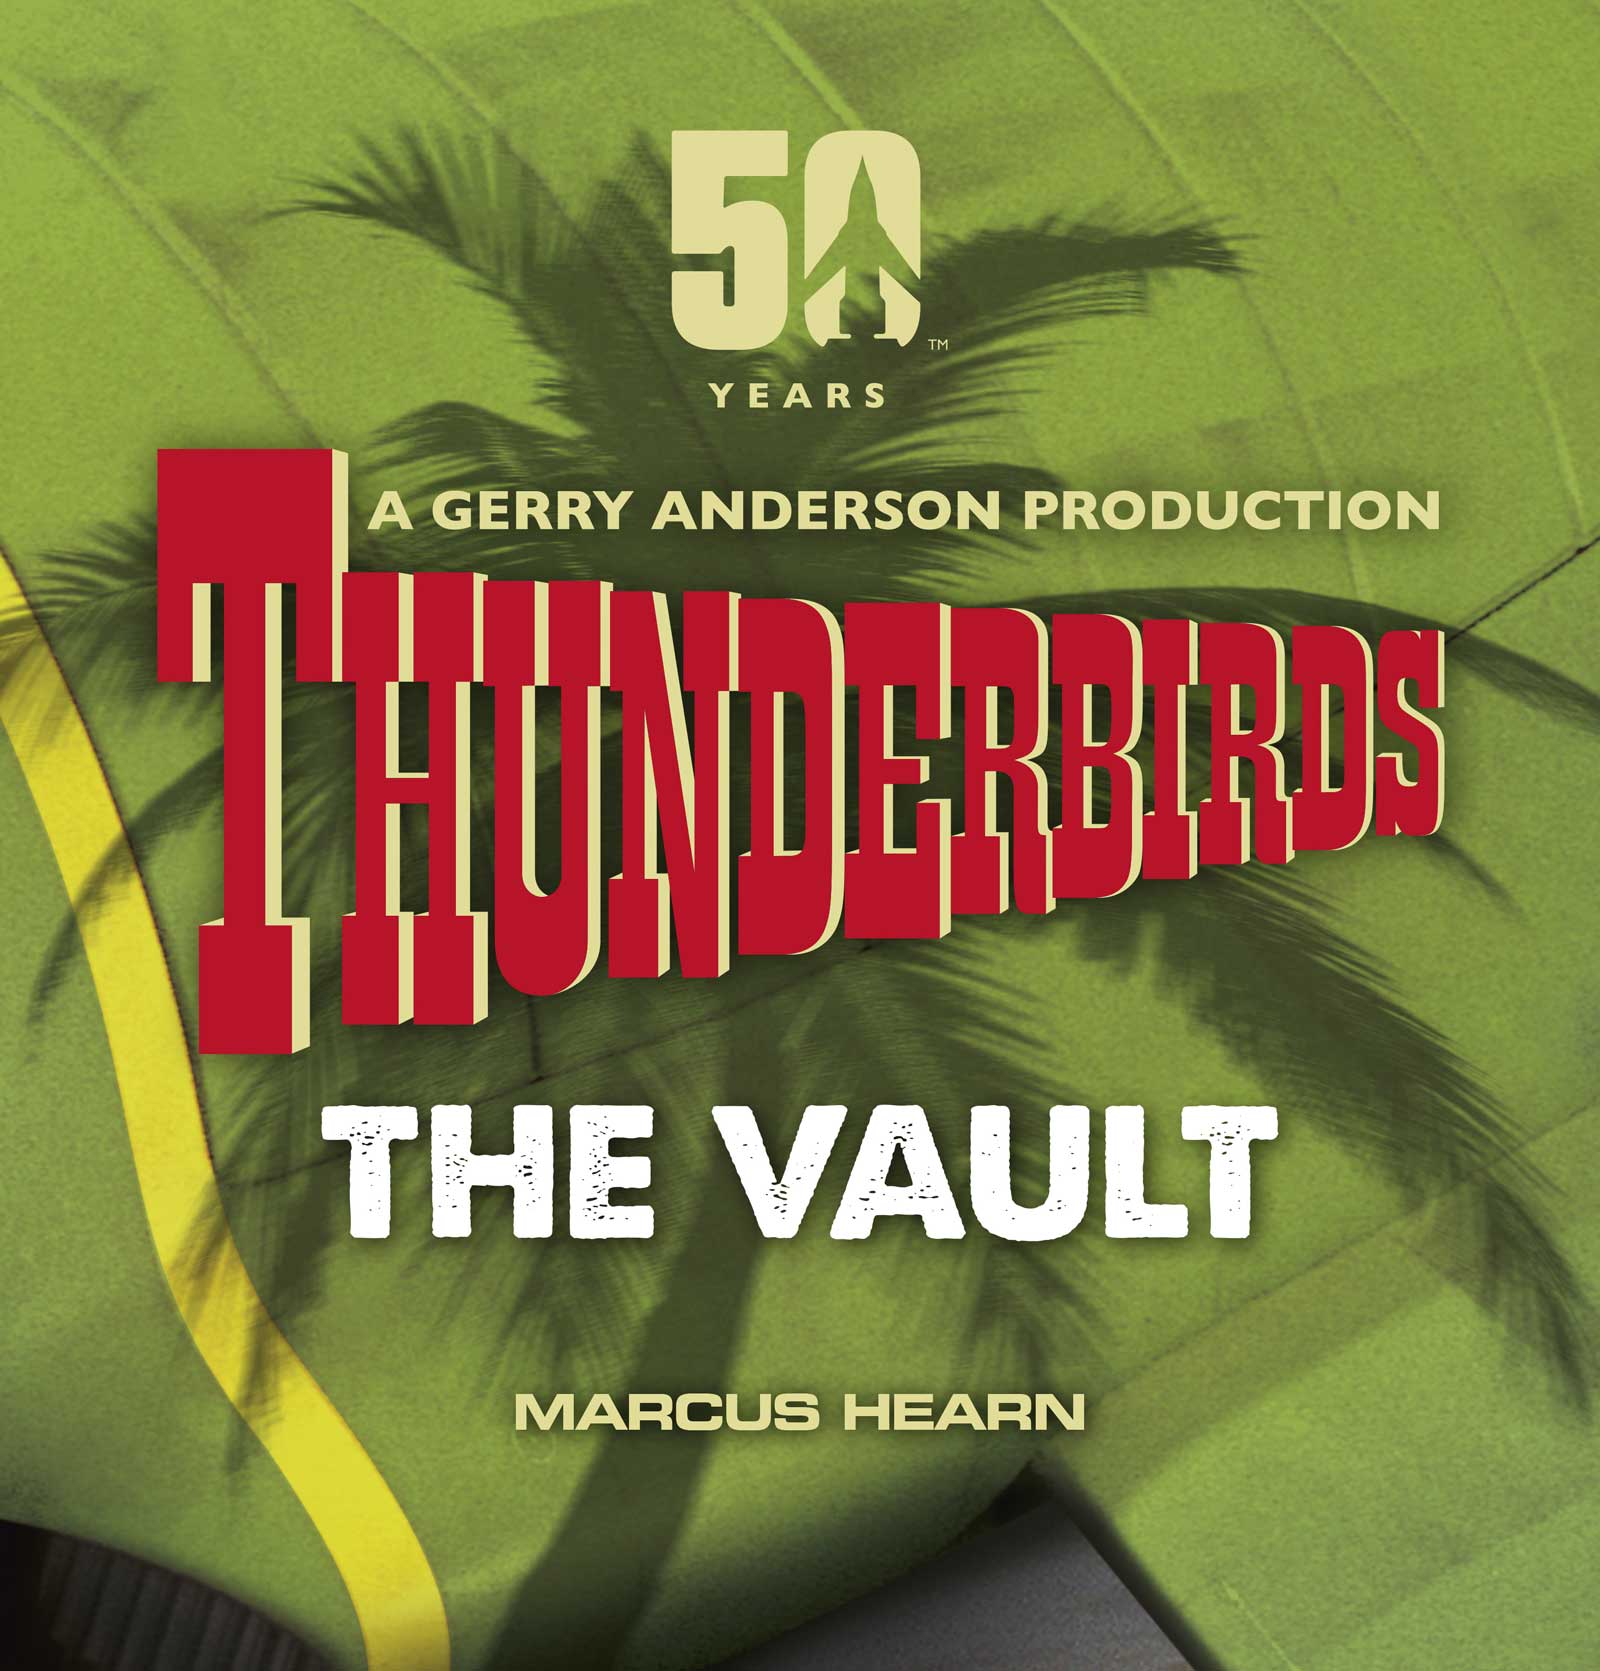 Thunderbirds: The Vault